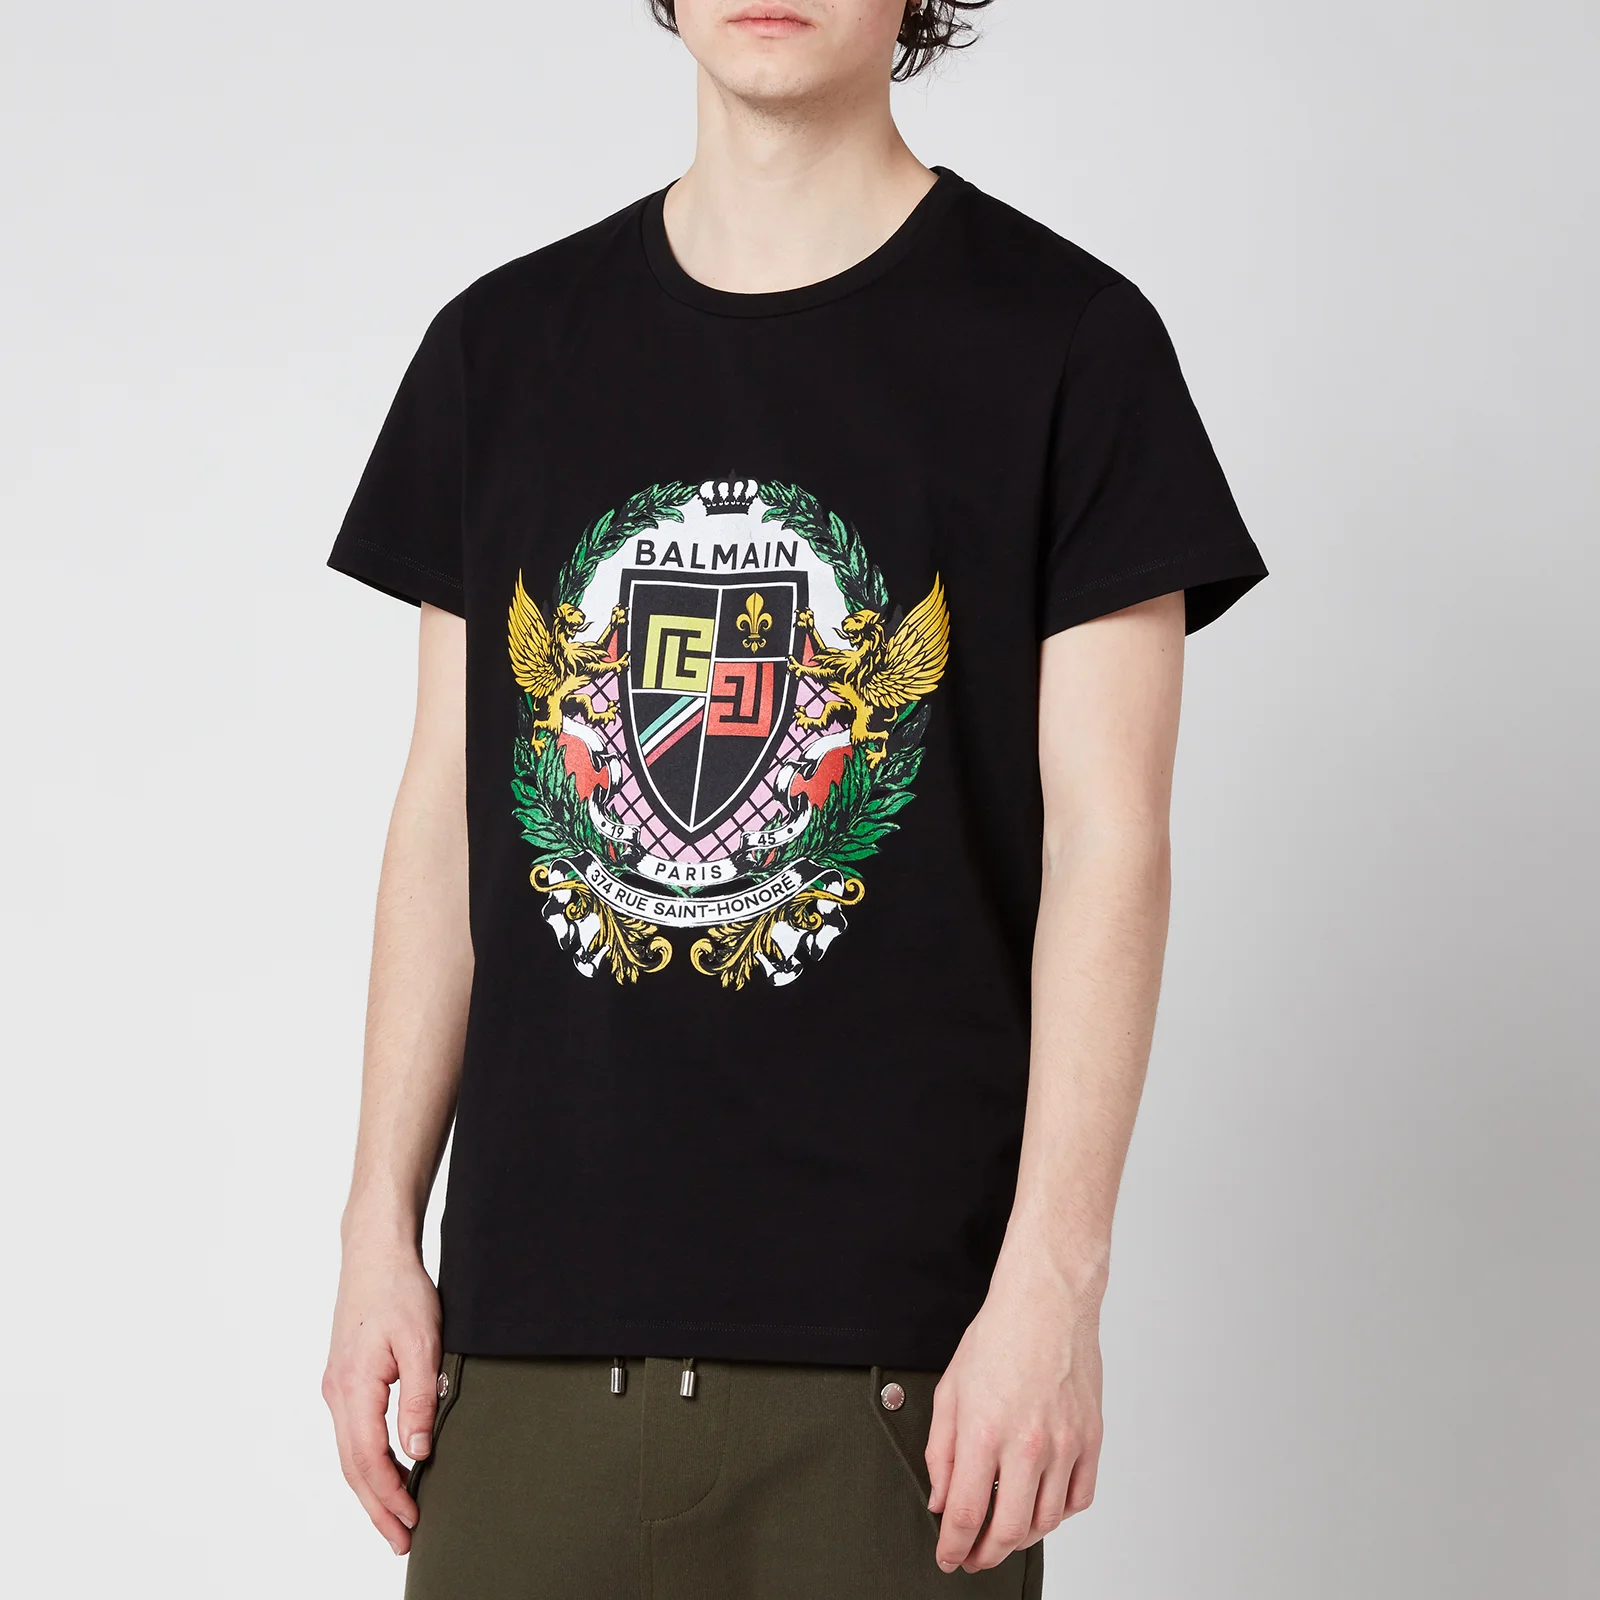 Balmain Men's Printed Crest T-Shirt - Black Image 1